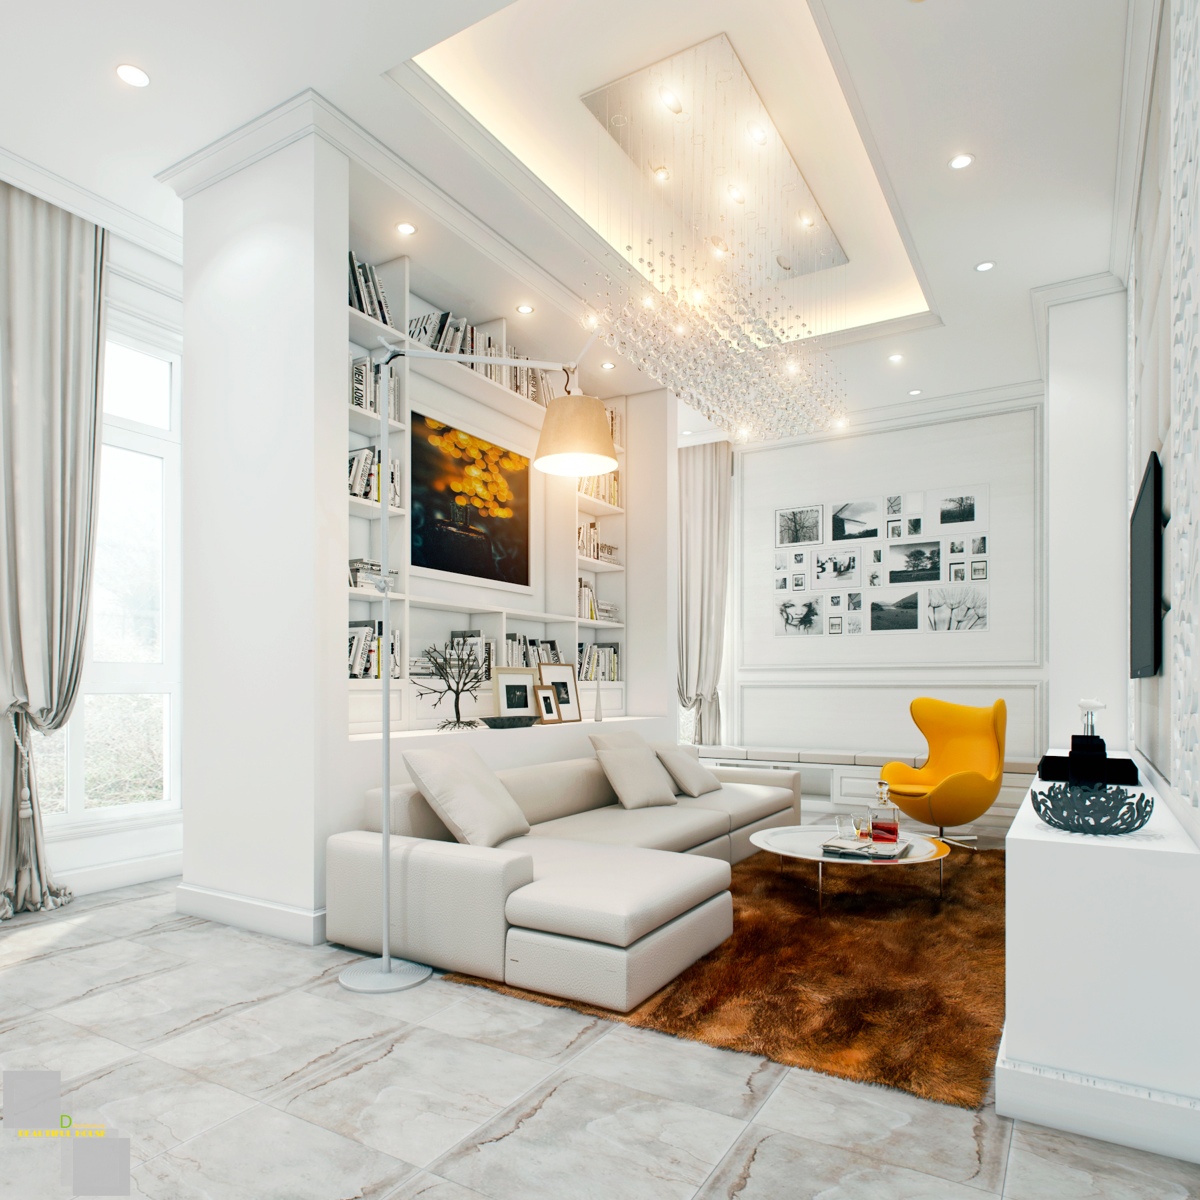 12 Urban Chic Living Room Decor Ideas For The Modern Homeowner